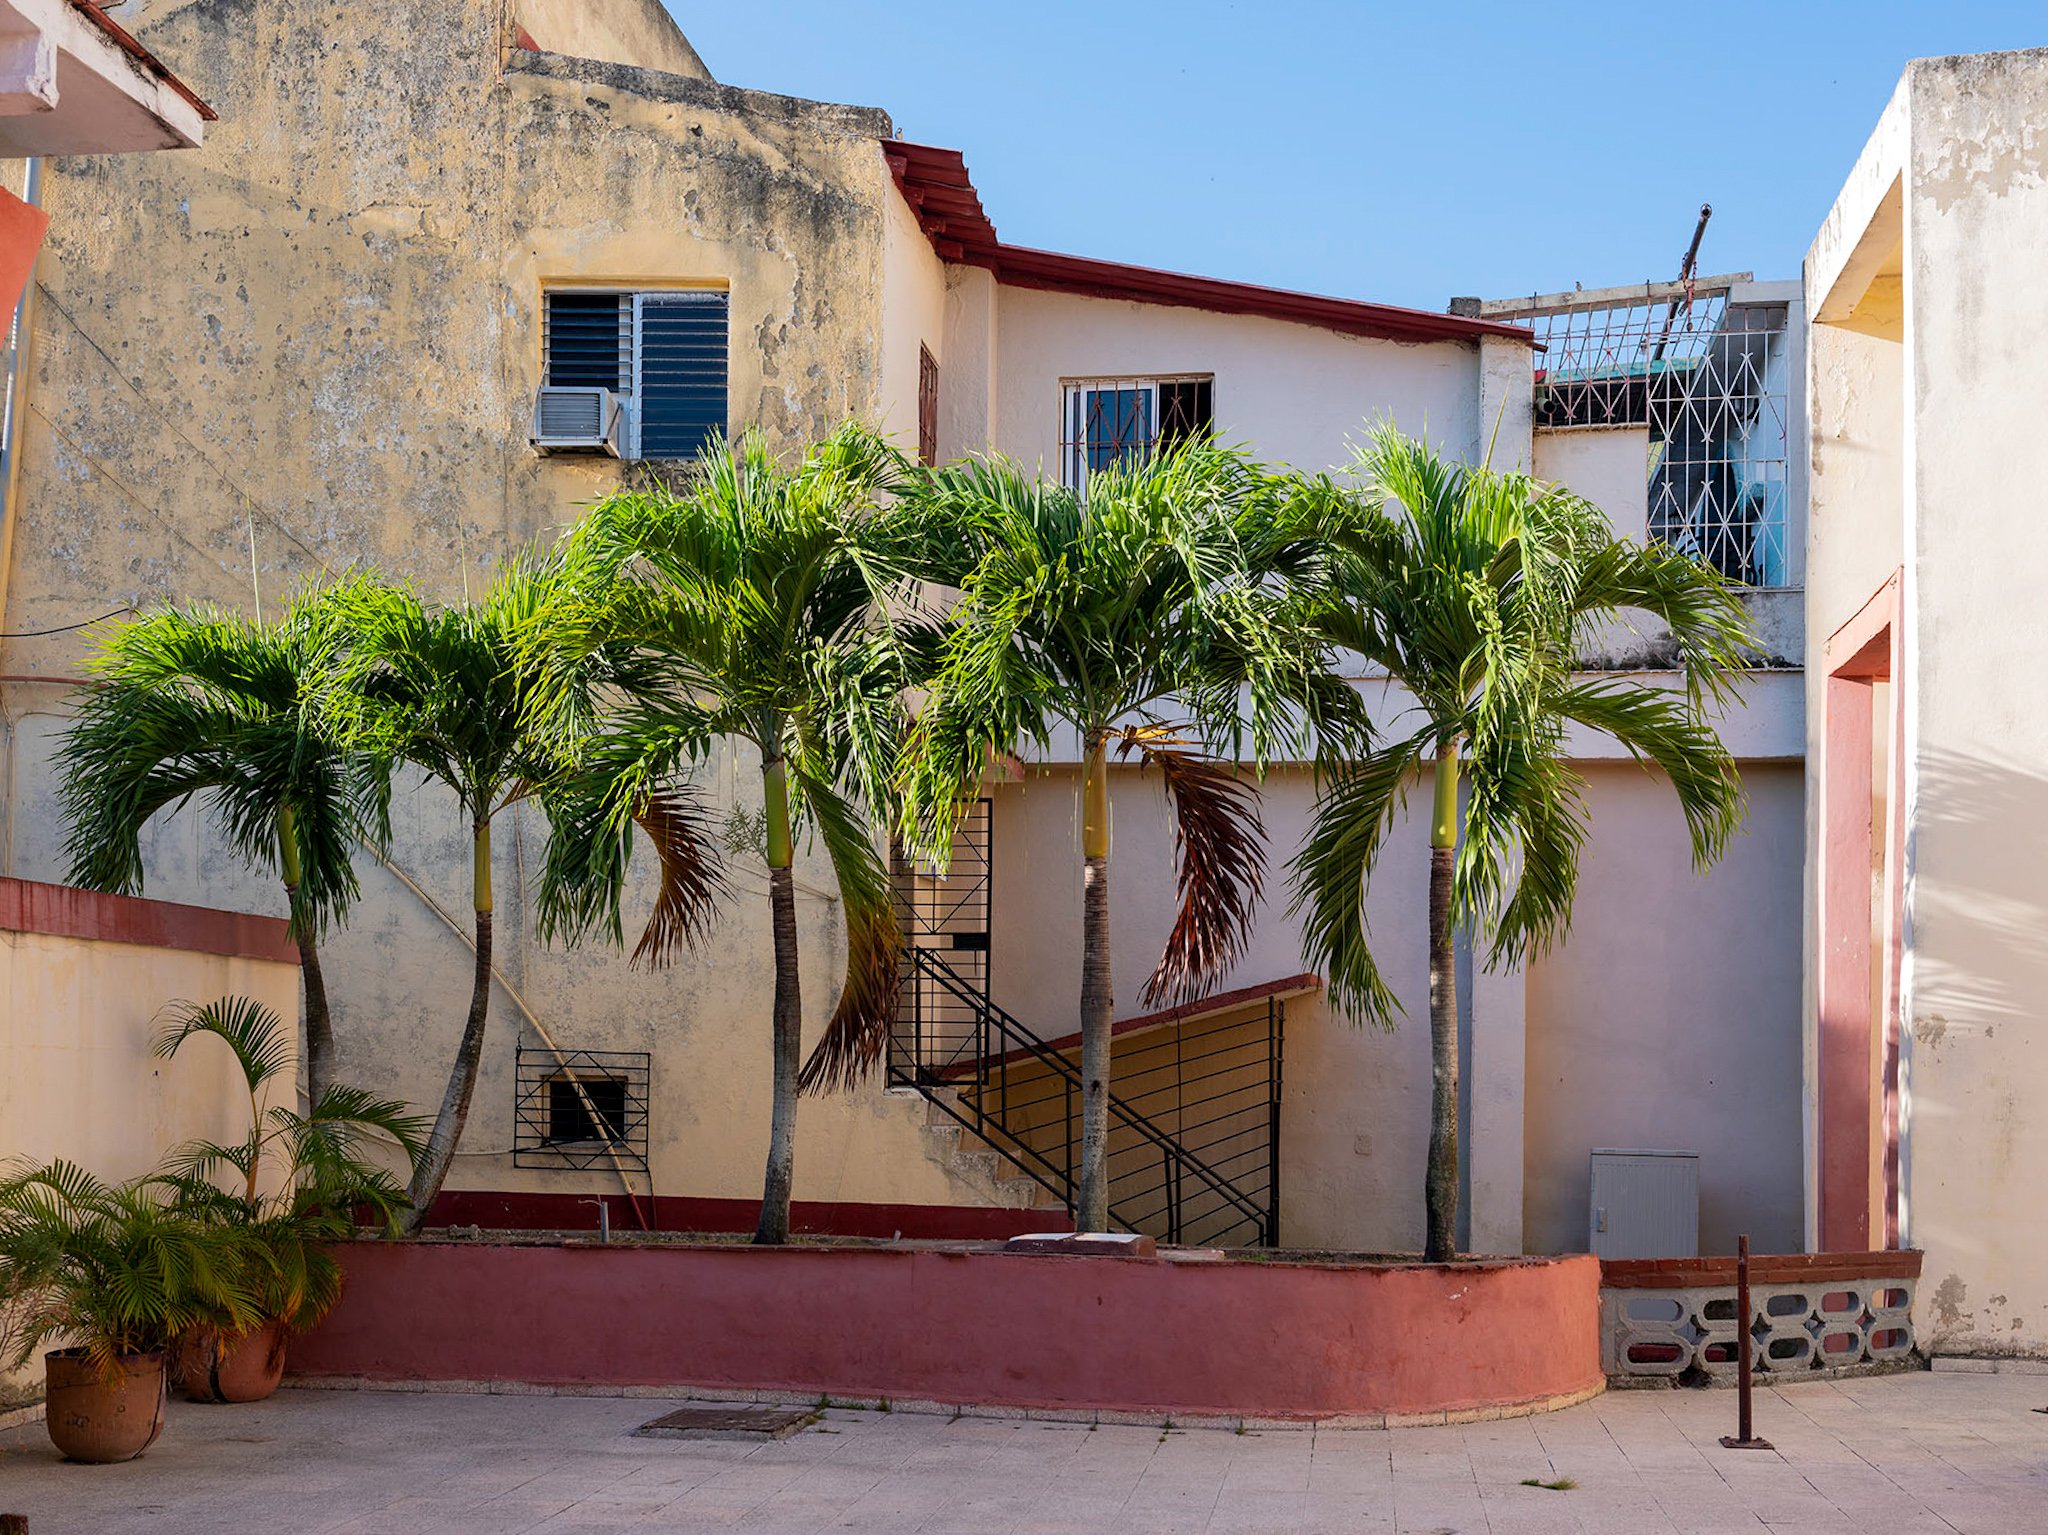 Courtyard, Havana